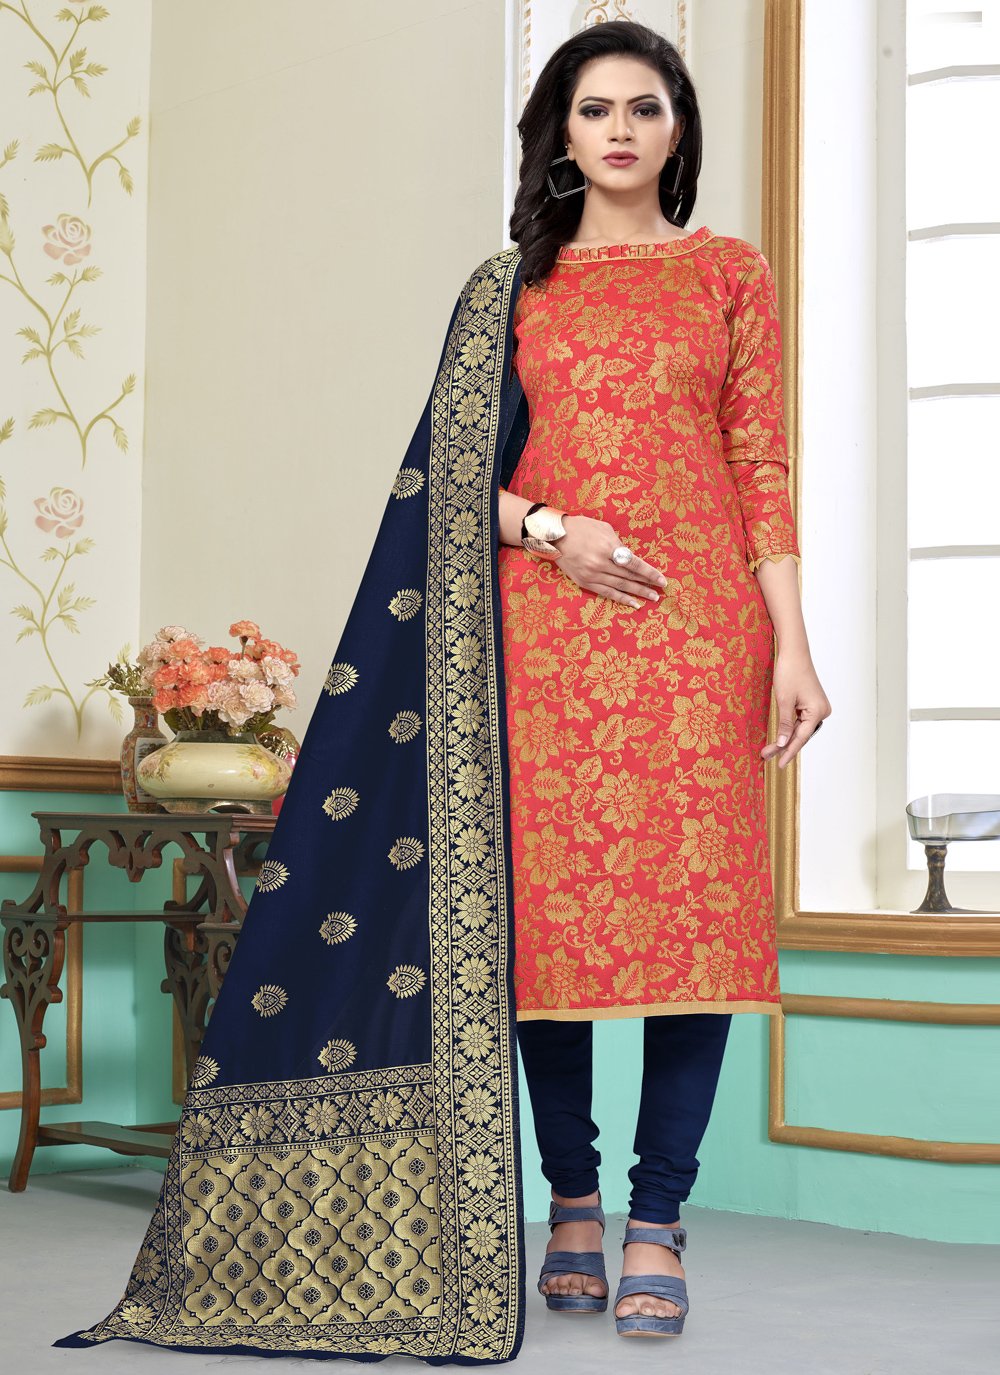 Trending | $26 - $39 - Cotton Churidar Suits, Cotton Churidar Salwar Kameez  and Cotton Churidar Salwar Suits Online Shopping